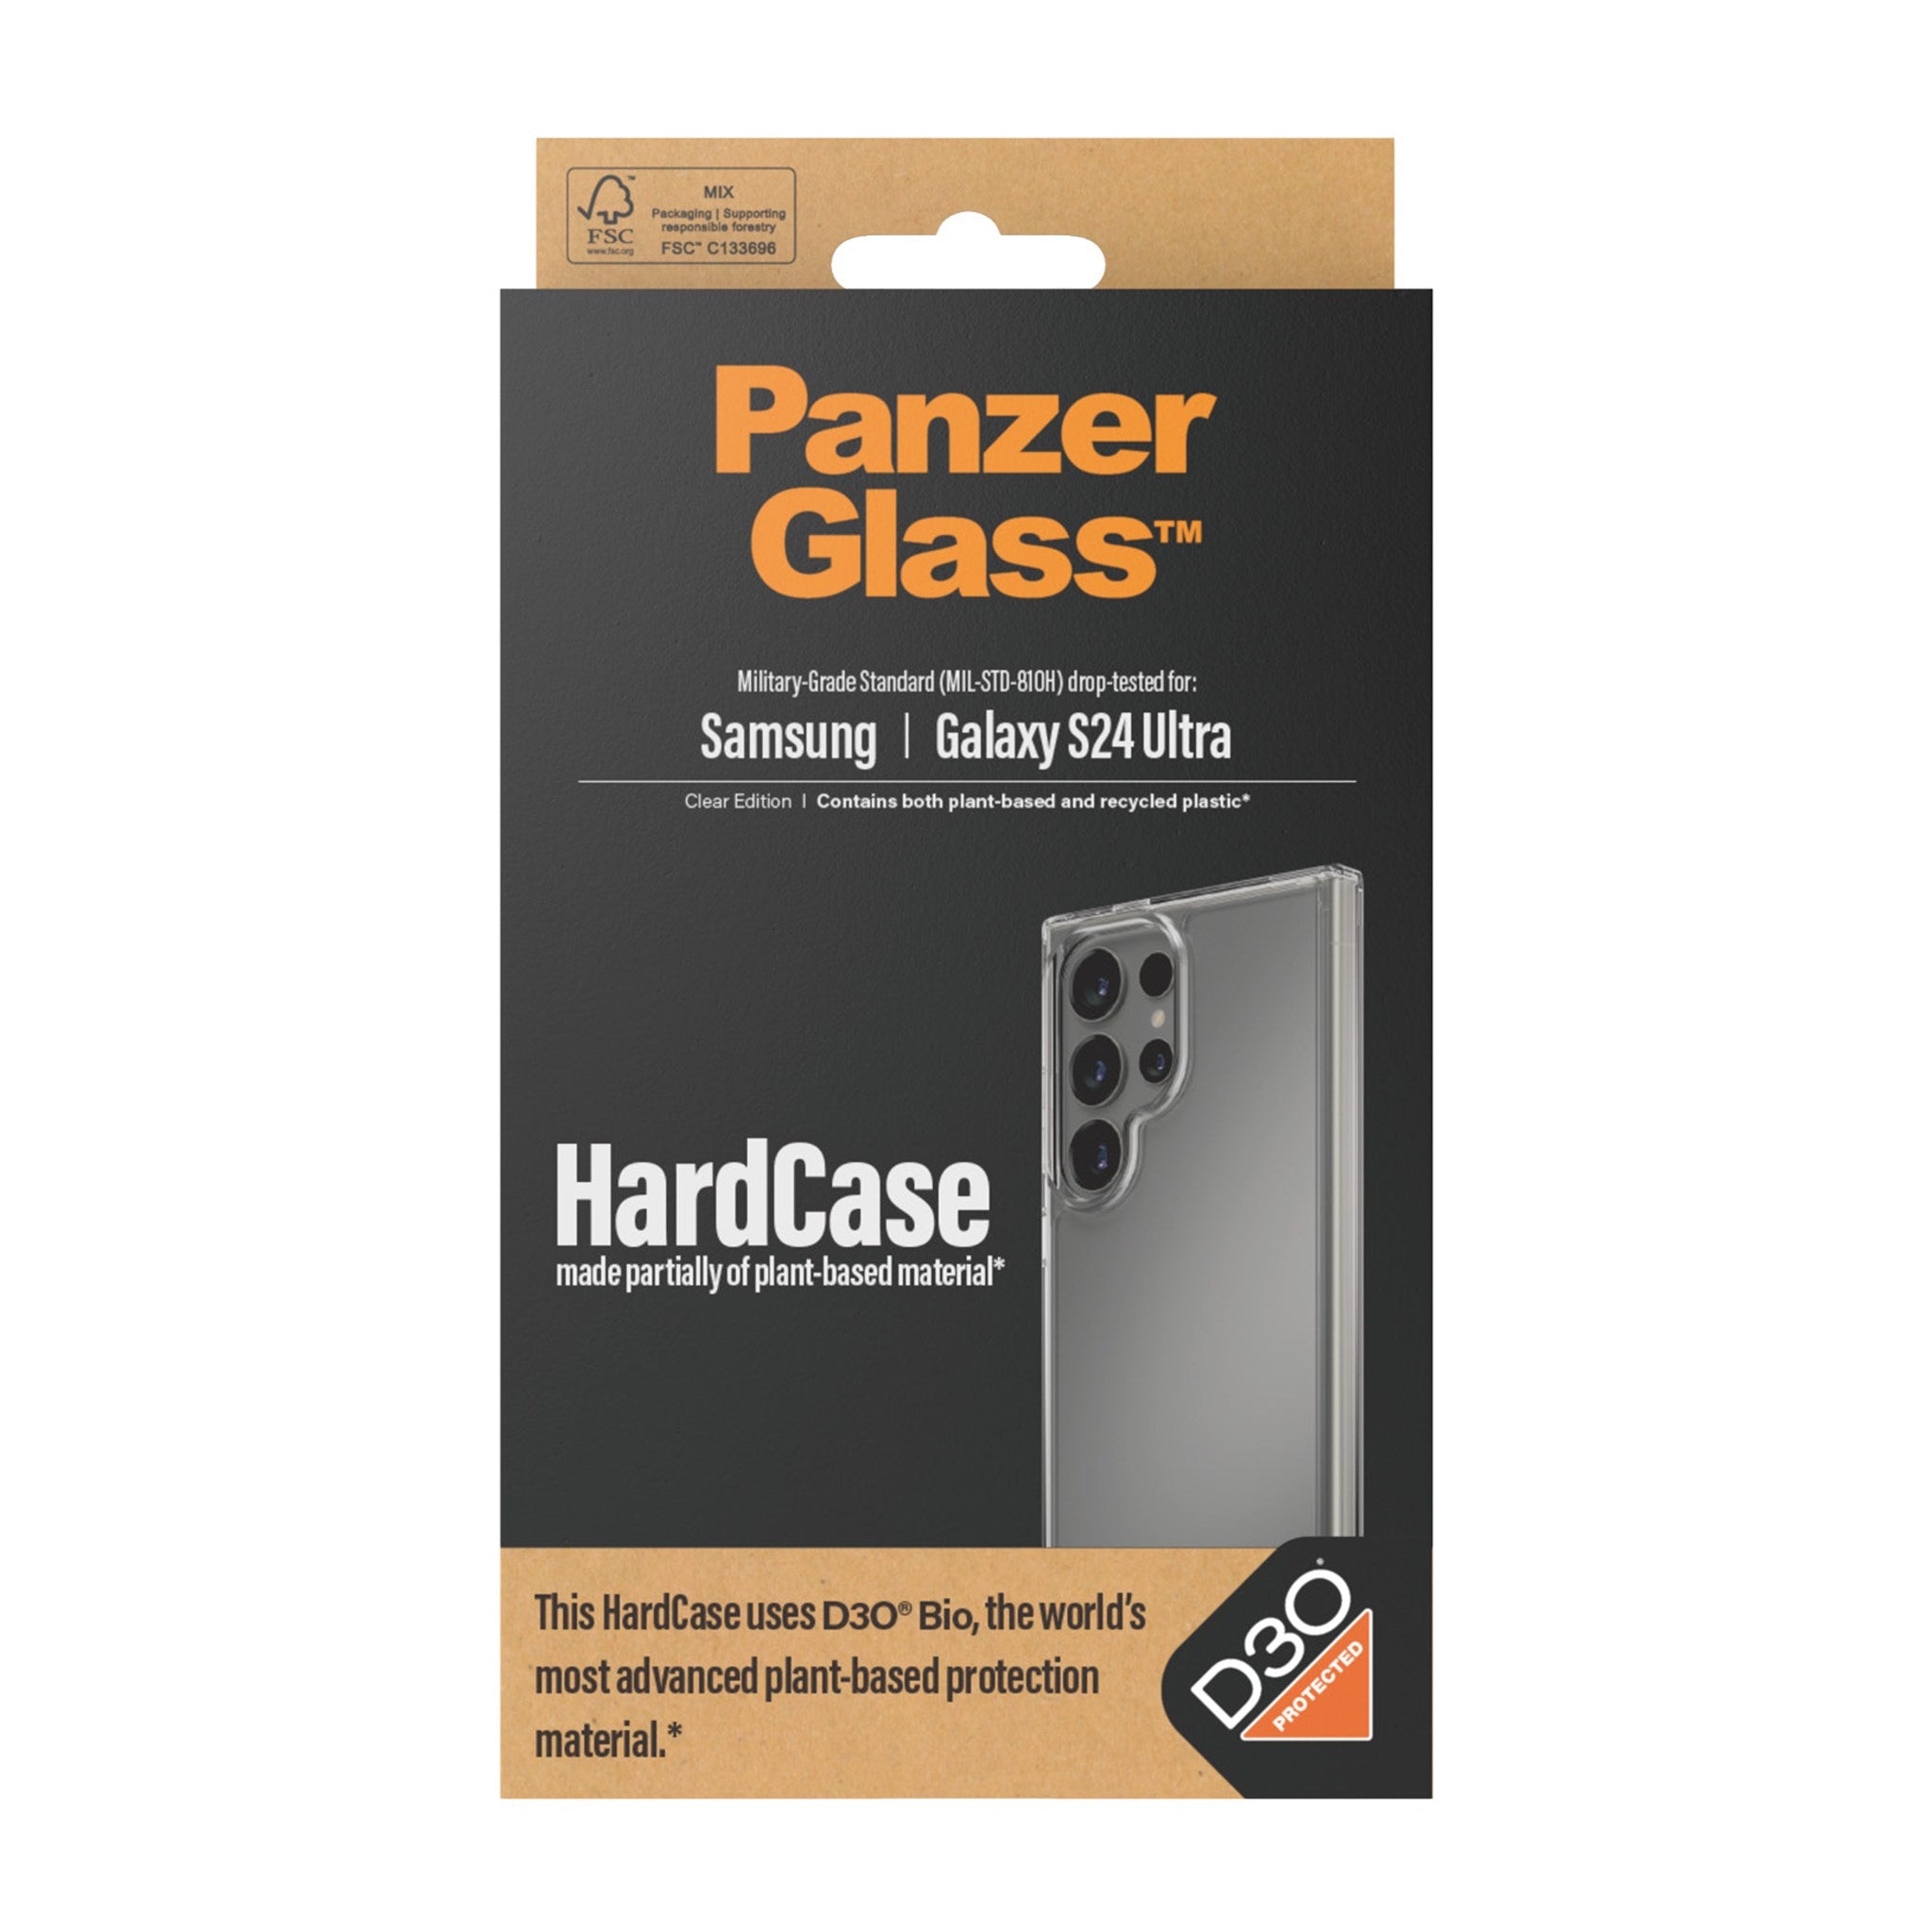 PanzerGlass® HardCase with D3O® Samsung Galaxy S24 Ultra